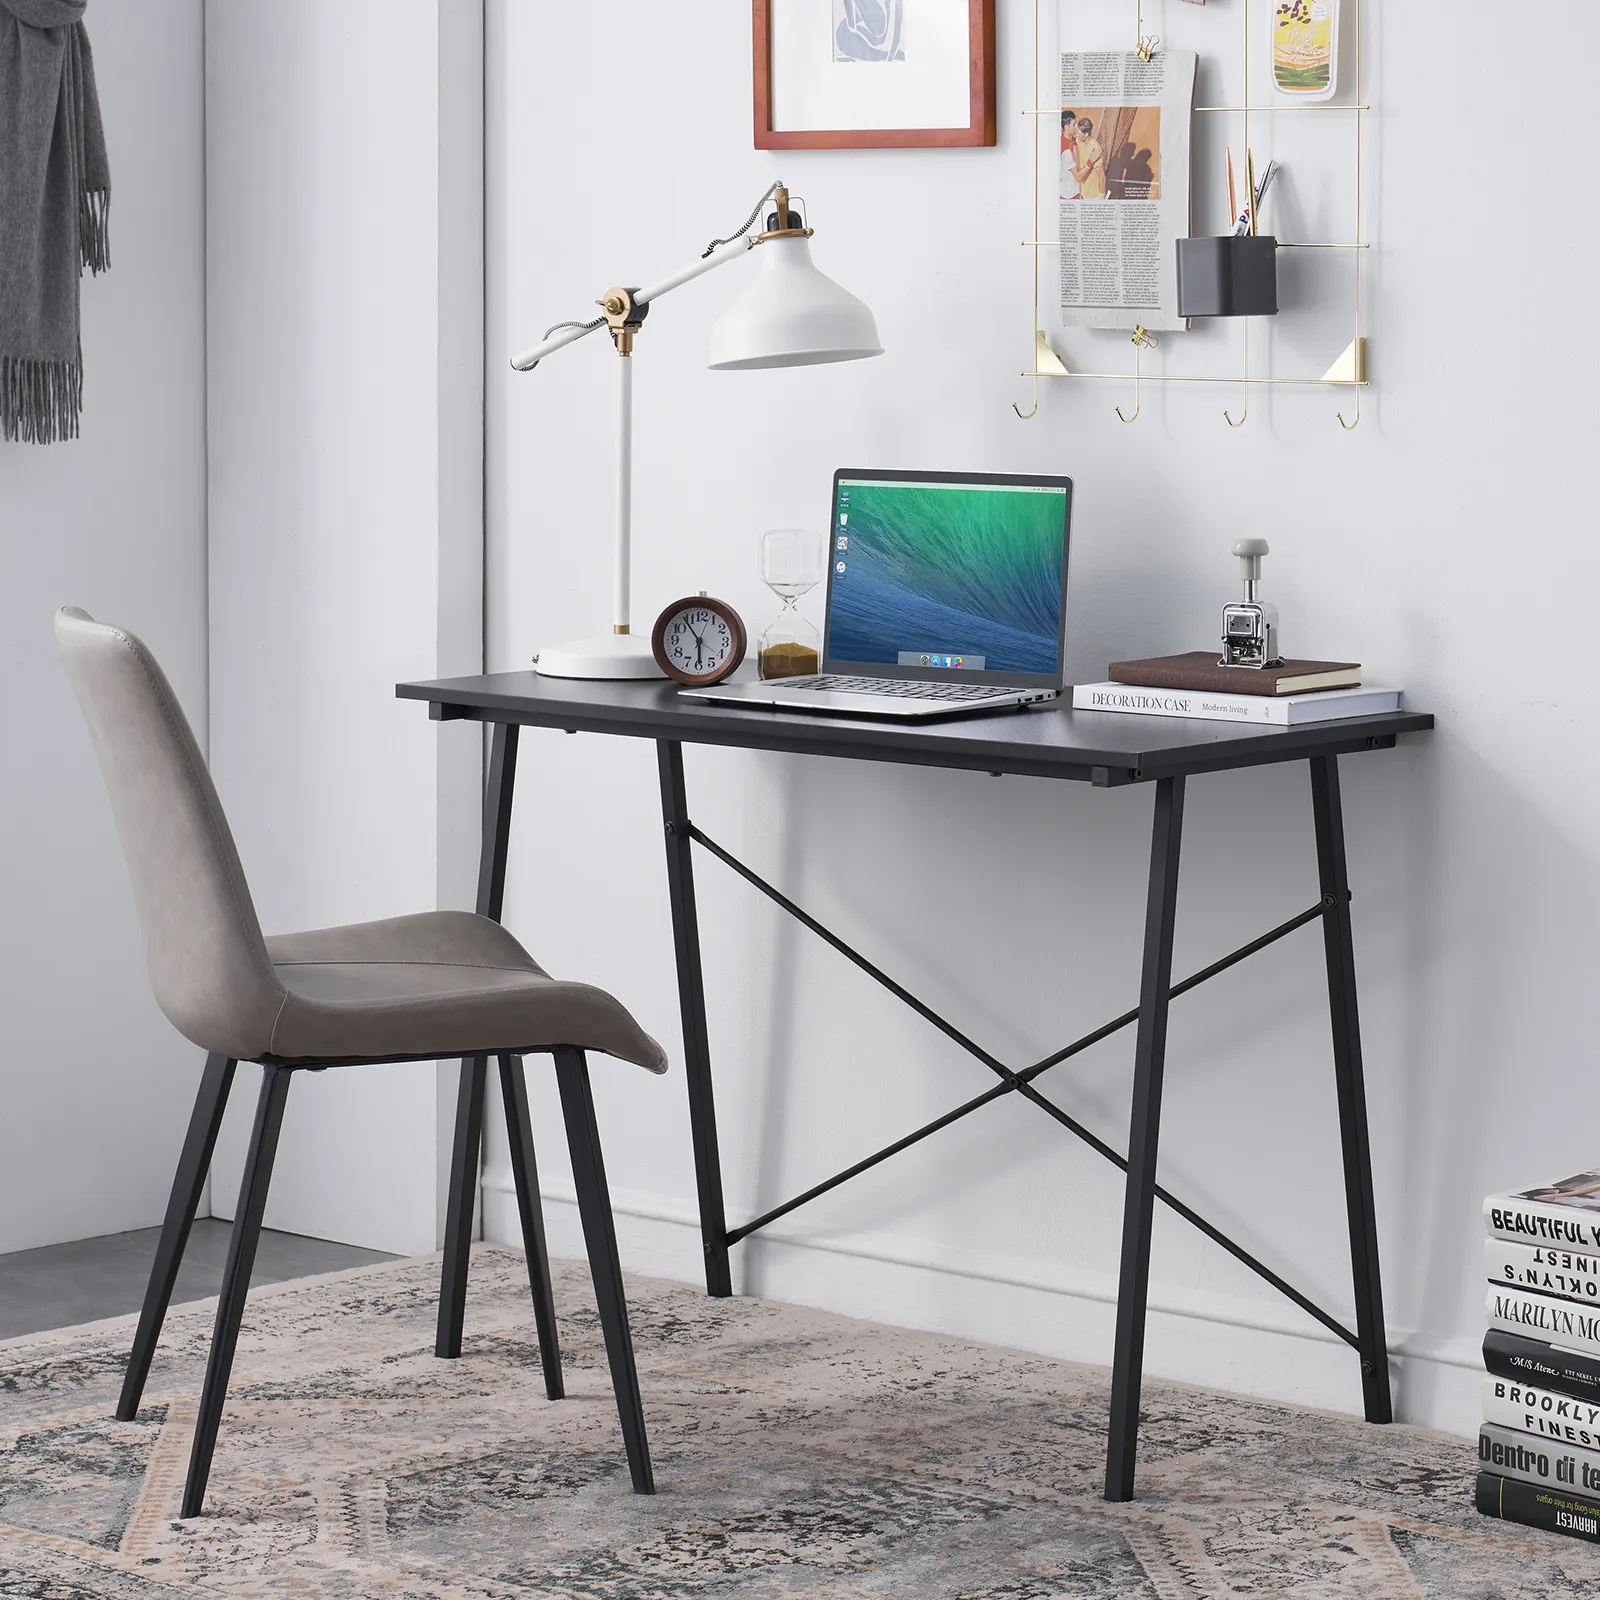 Home Simple Modern Single Small Desk Student Writing Desktop Bedroom Office Table Simple Pc Computer Desks